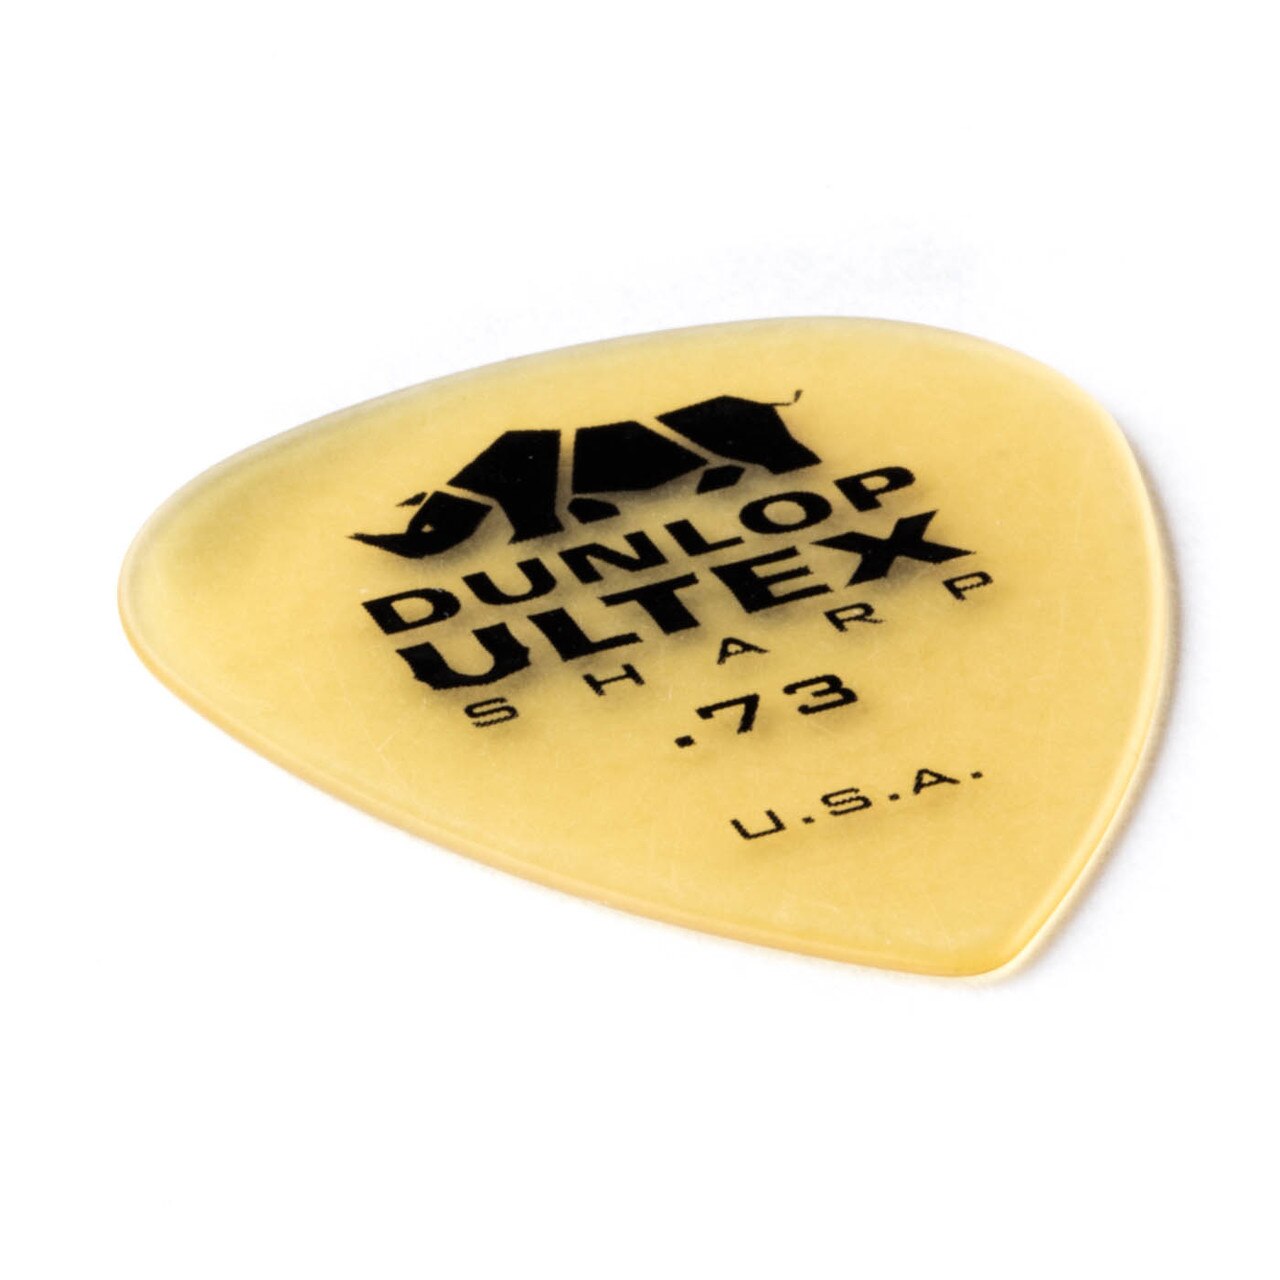 Jim Dunlop Ultex Sharp 433 0.73mm - Plectrum - Variation 1